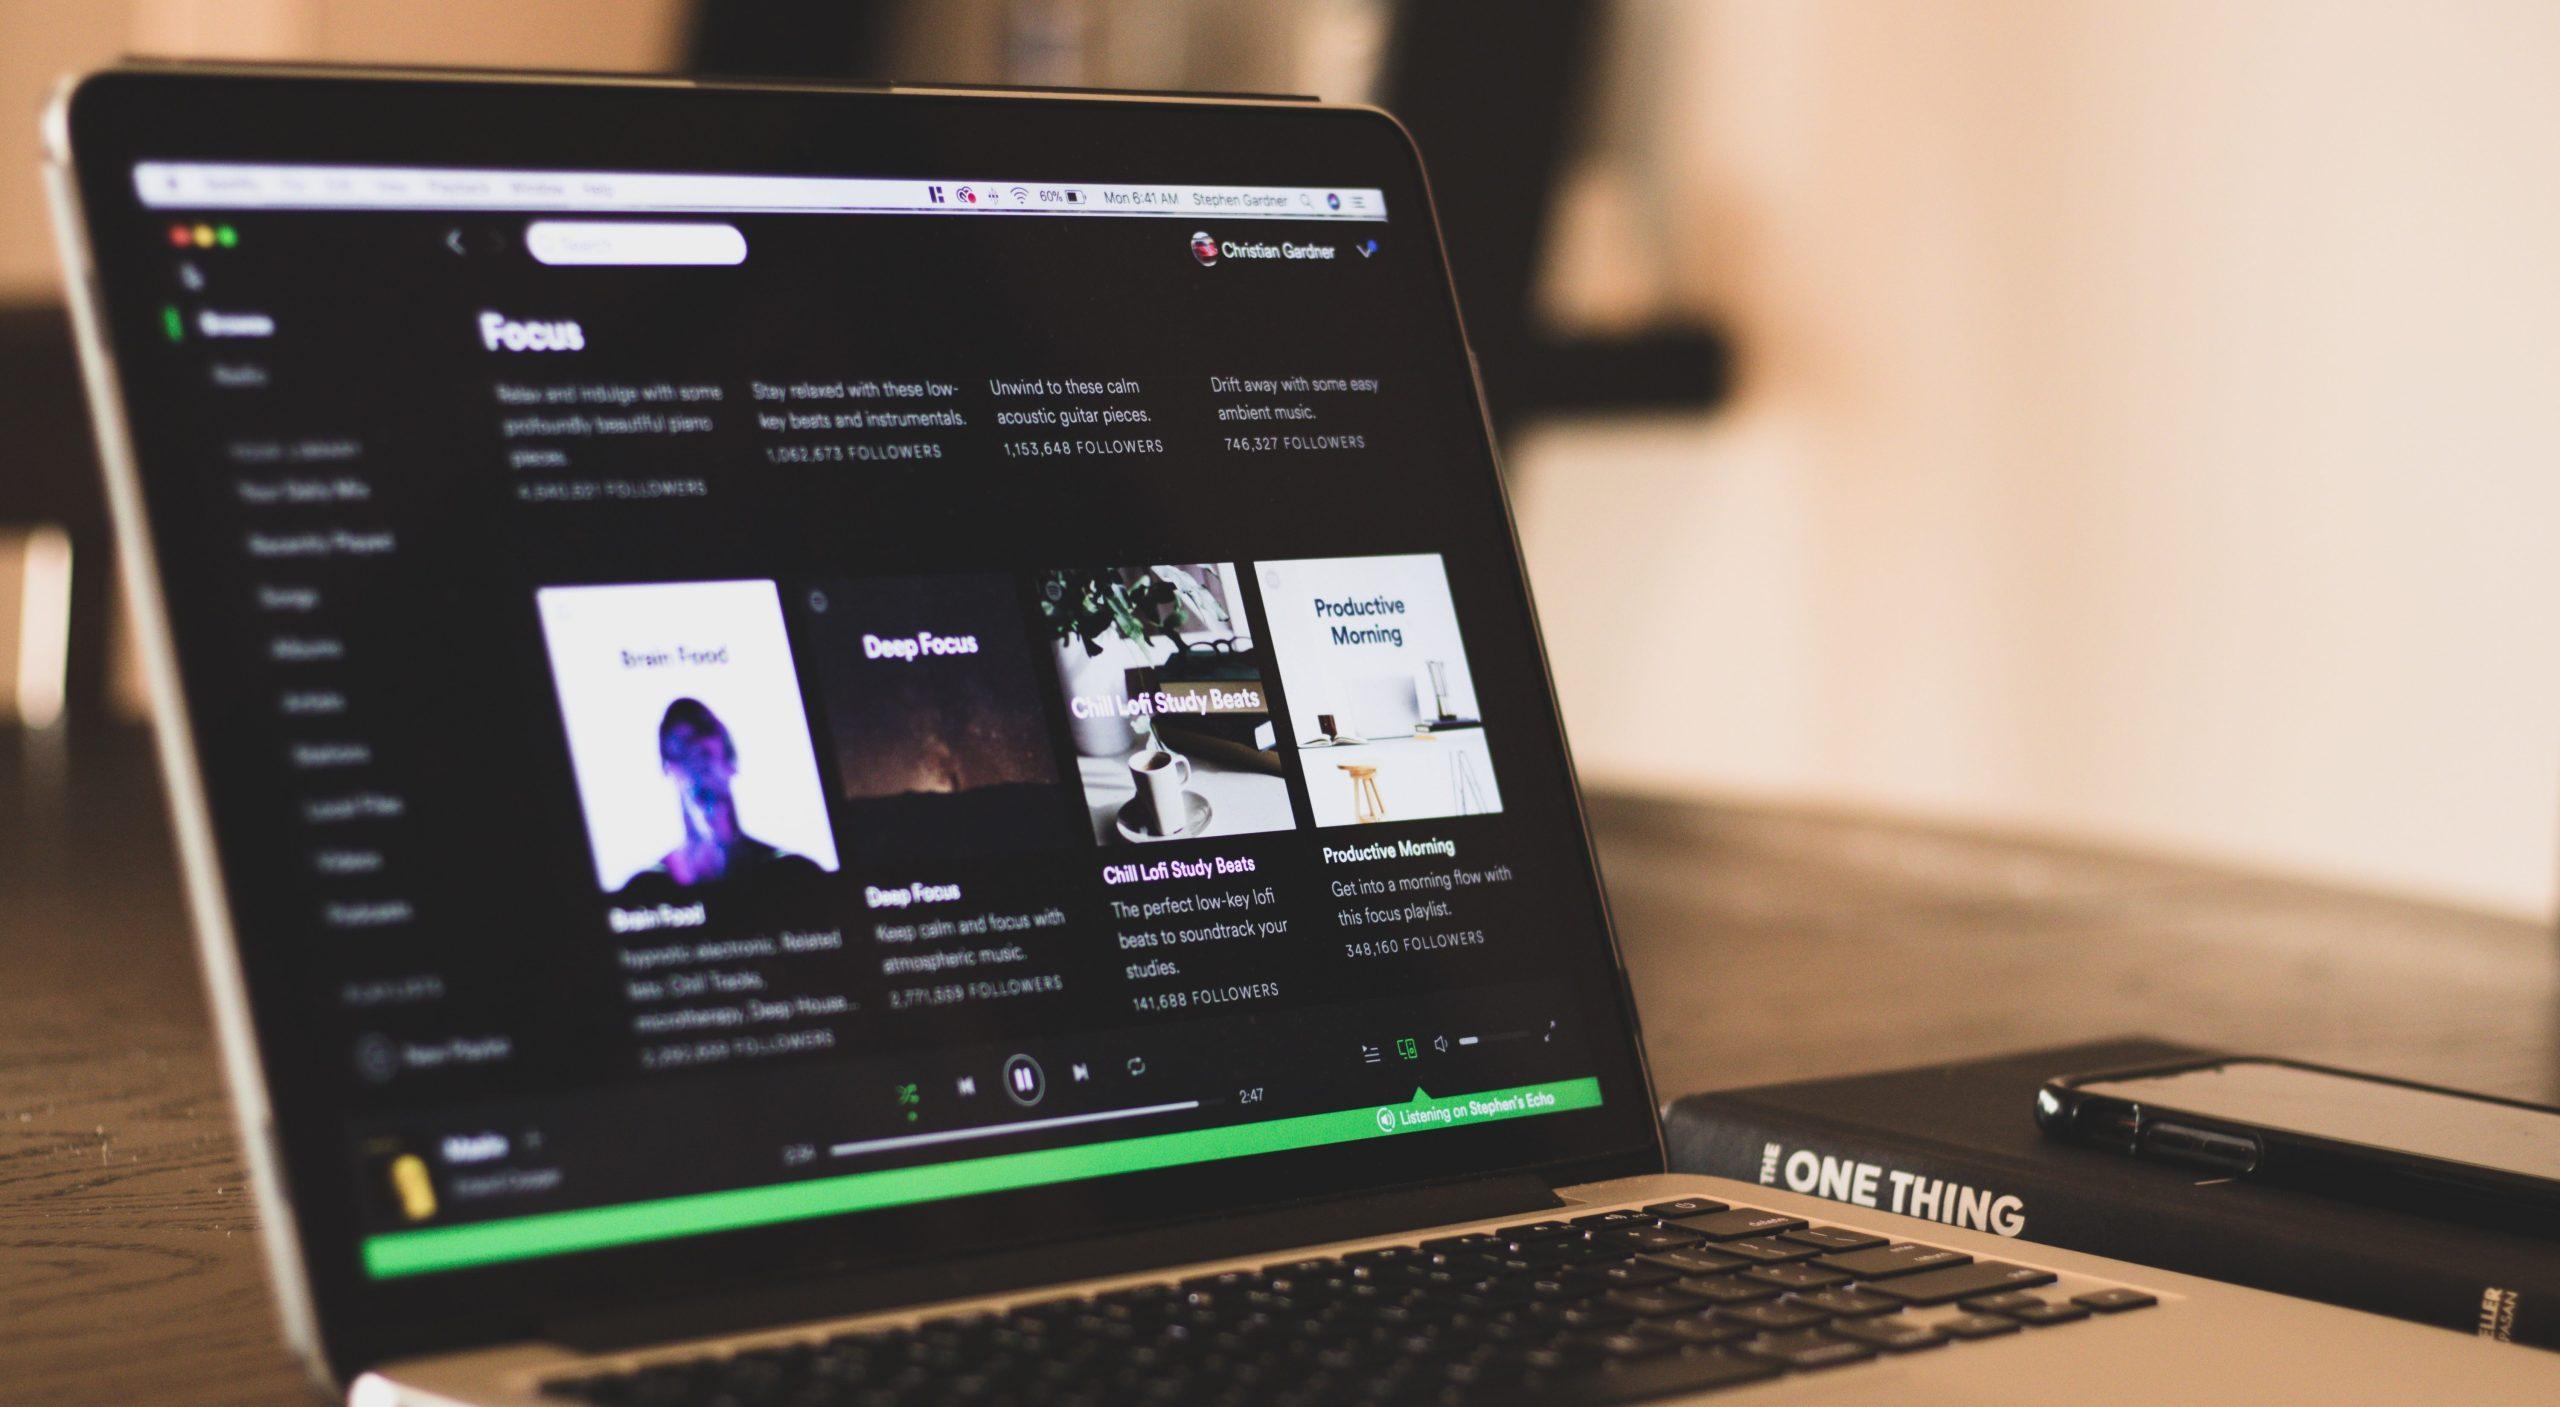 Laptop displaying a Spotify page.